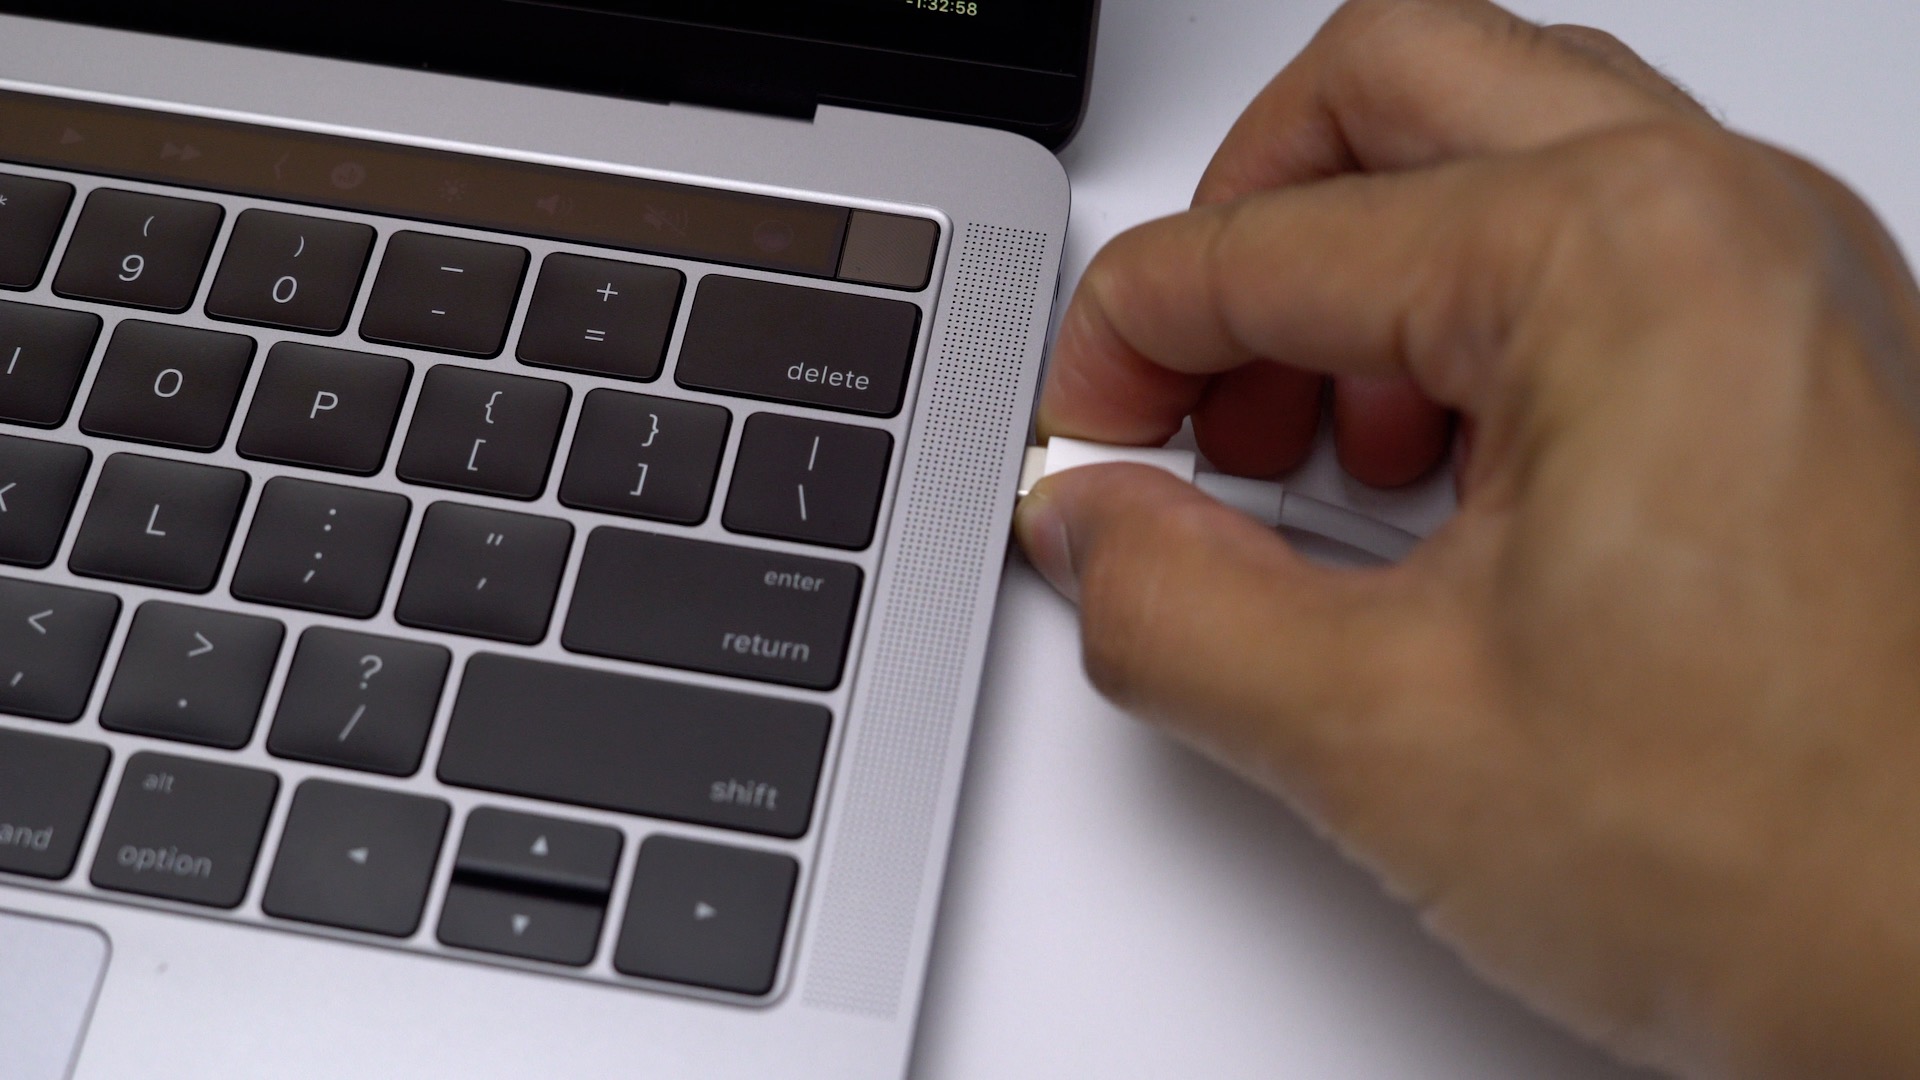 shutdown macbook air keyboard shortcut